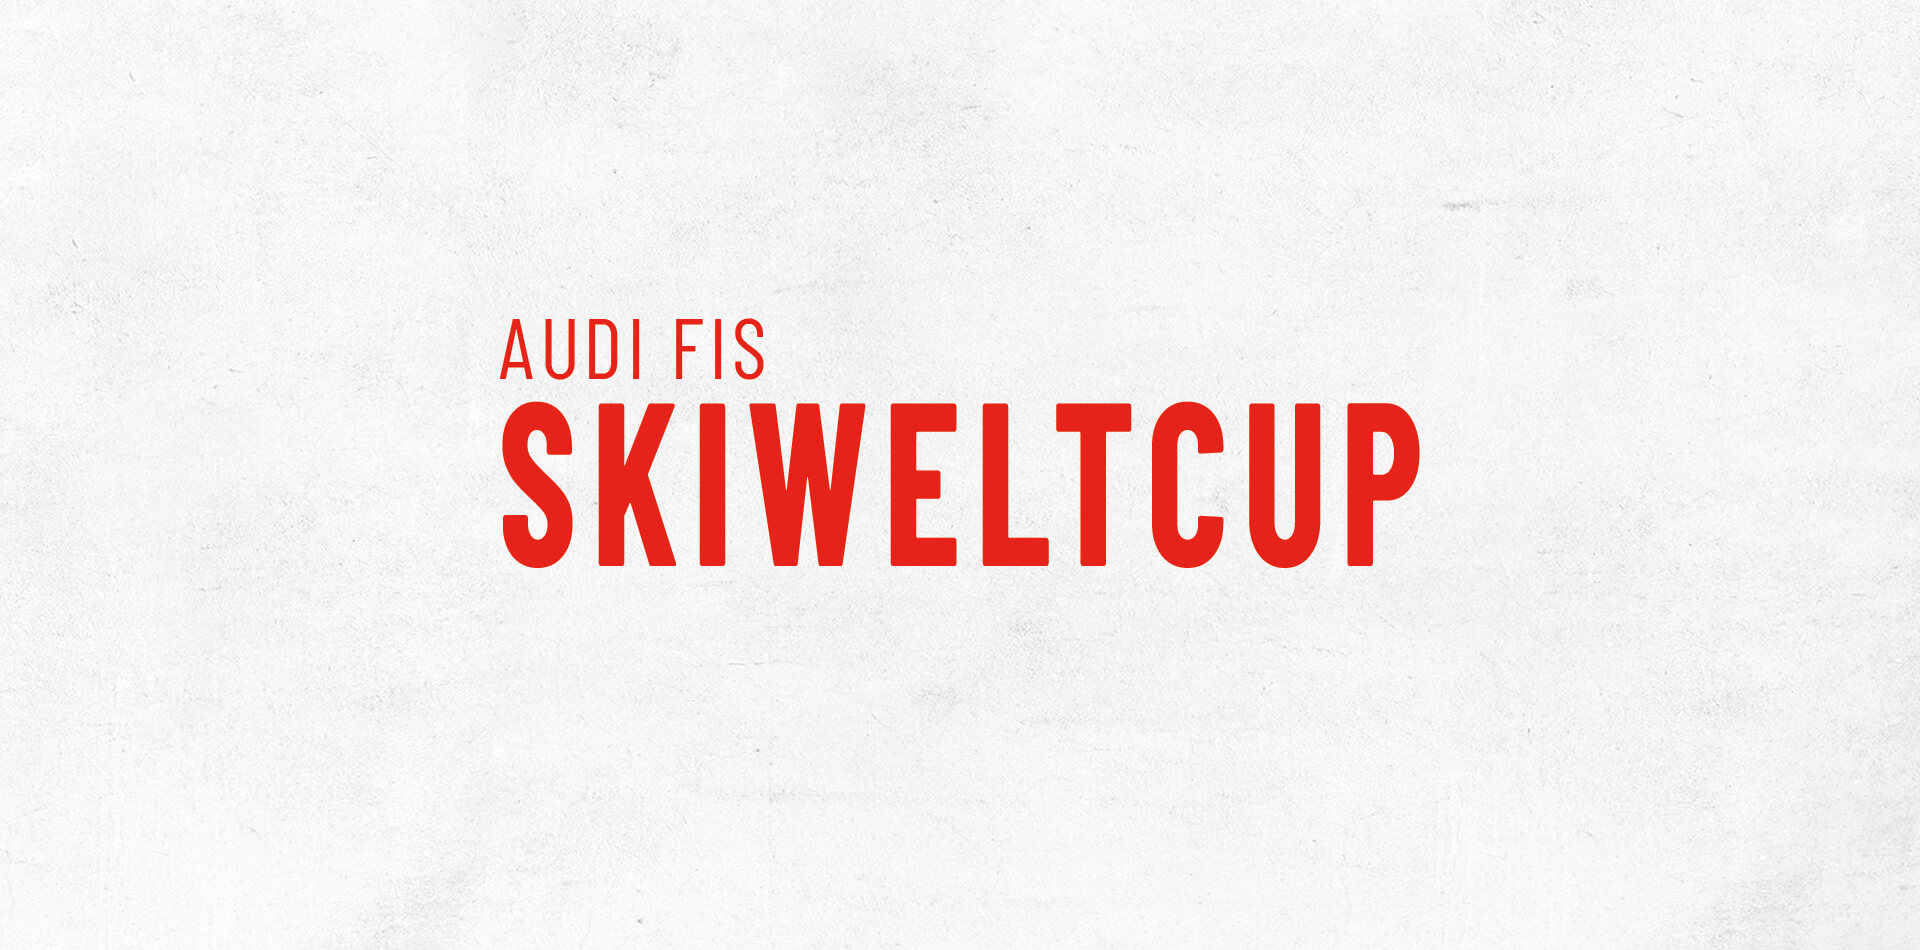 Audi fis Skiweltcup Schriftzug